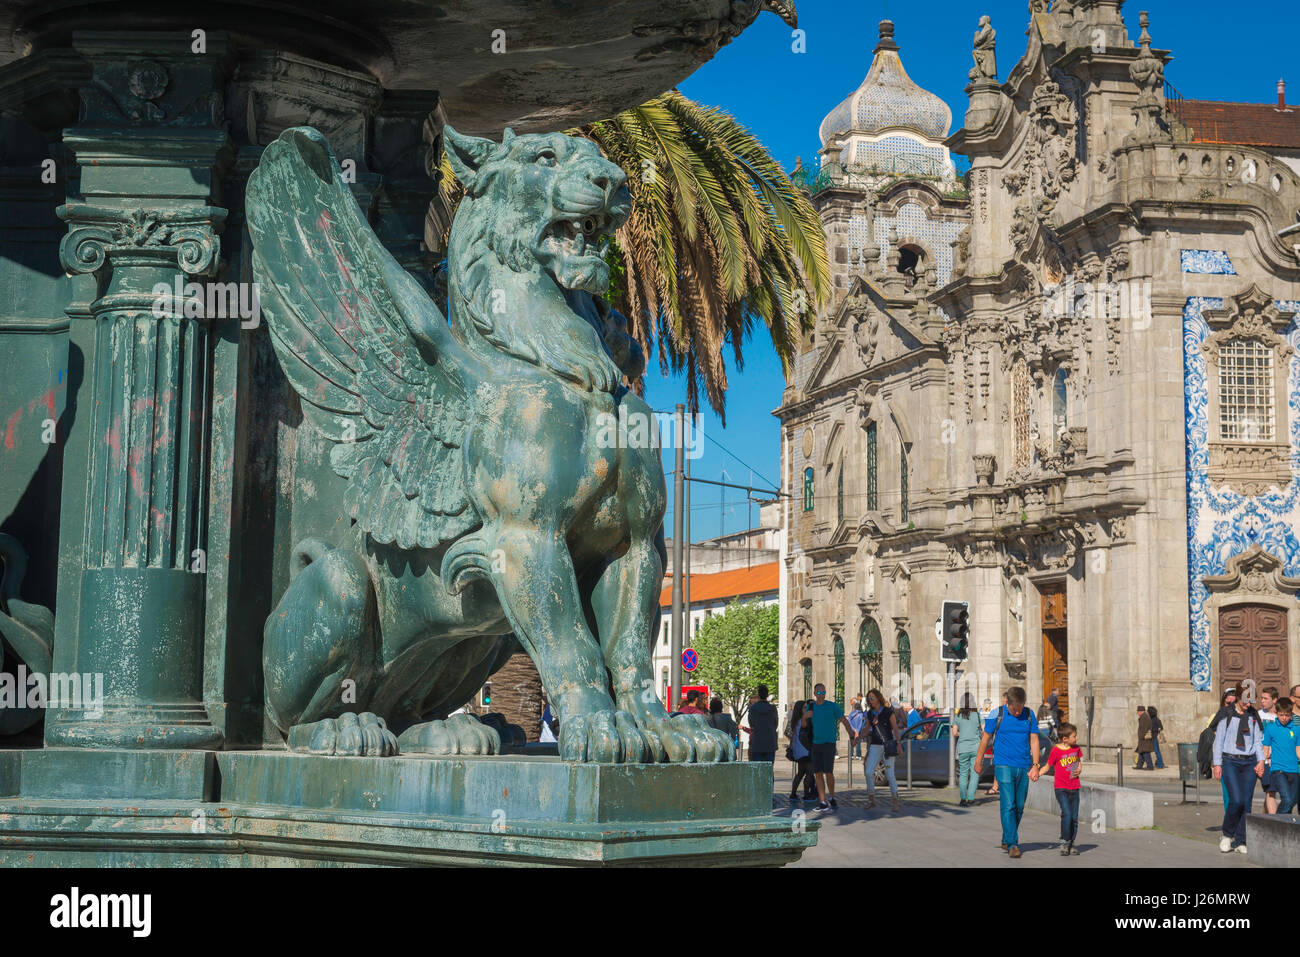 Porto Portugal fountain, detail of the "Fountain of Lions" sited in the  Praca de Gomez Teixeira near the historic Igreja do Carmo church, Porto  Stock Photo - Alamy